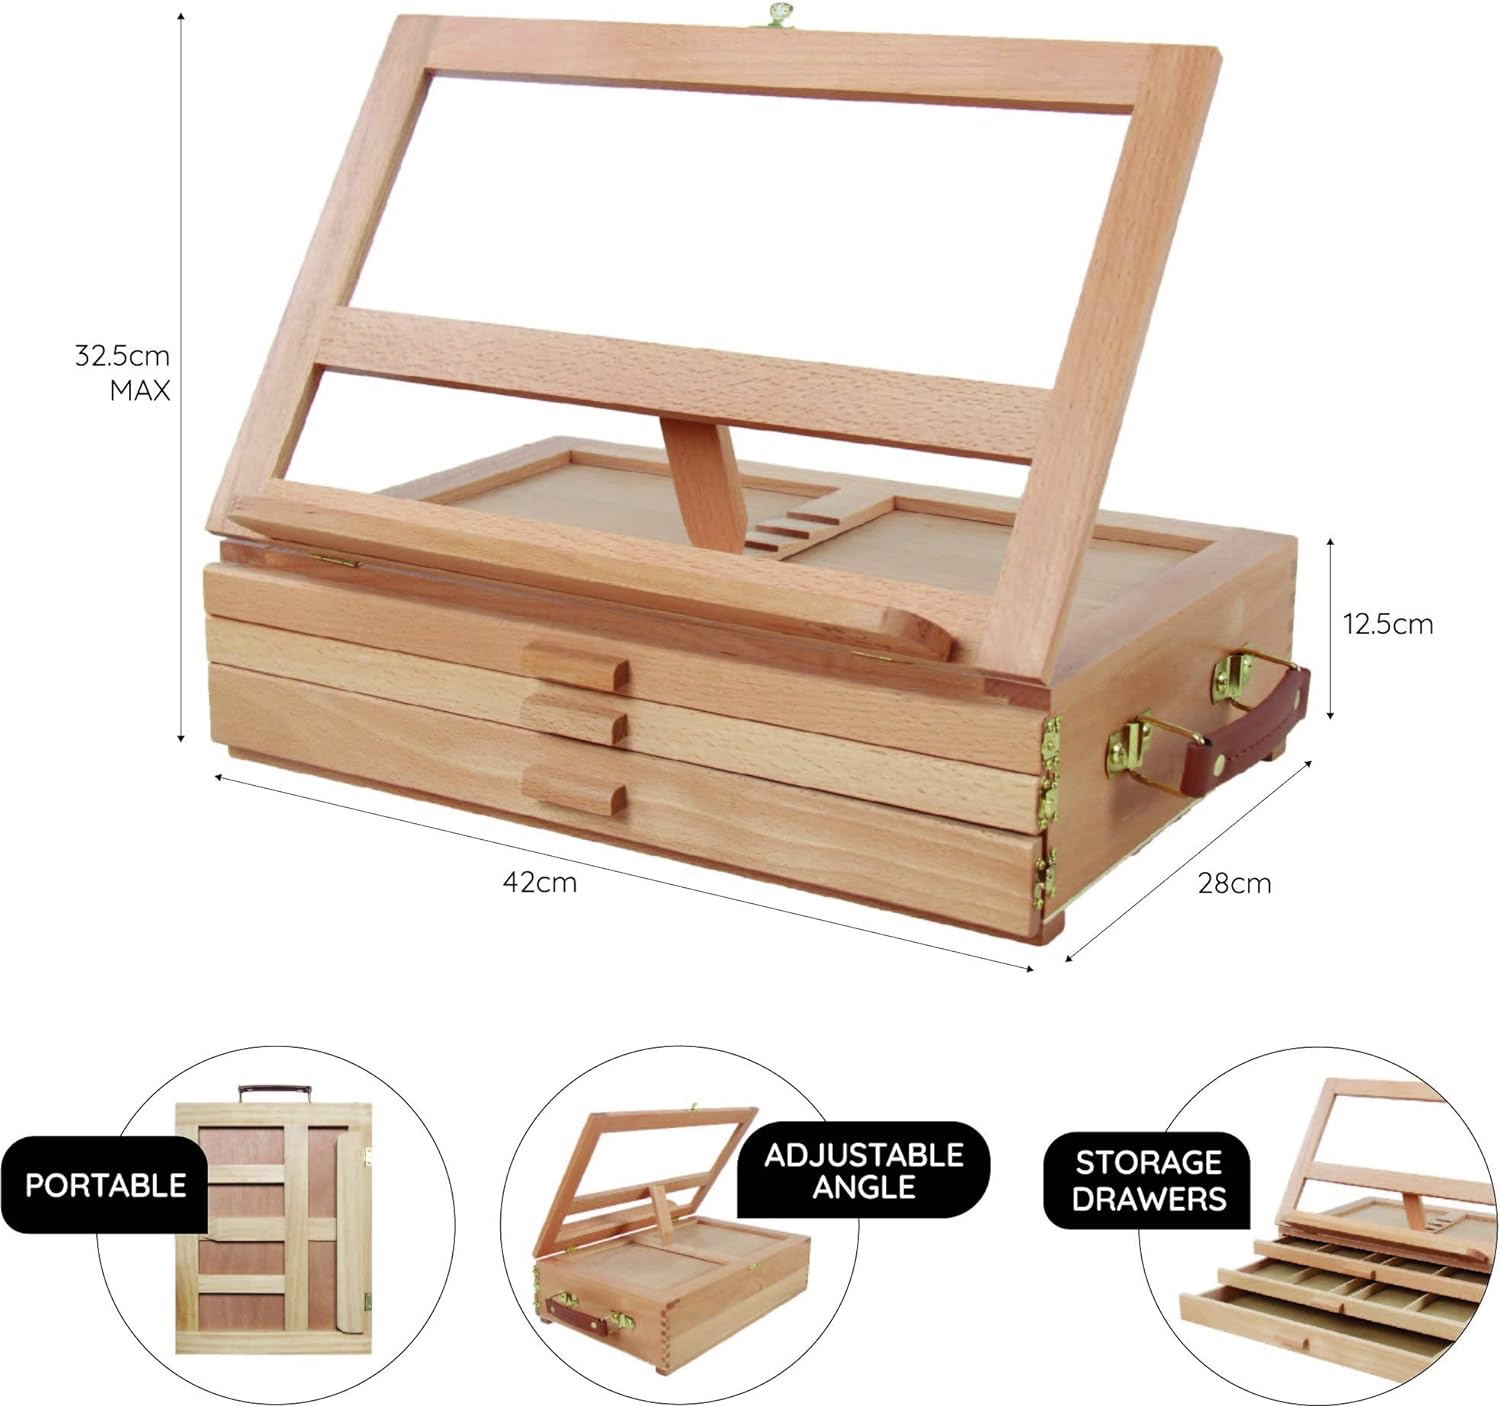 Create - Moy 3 Drawer Desk Box Easel